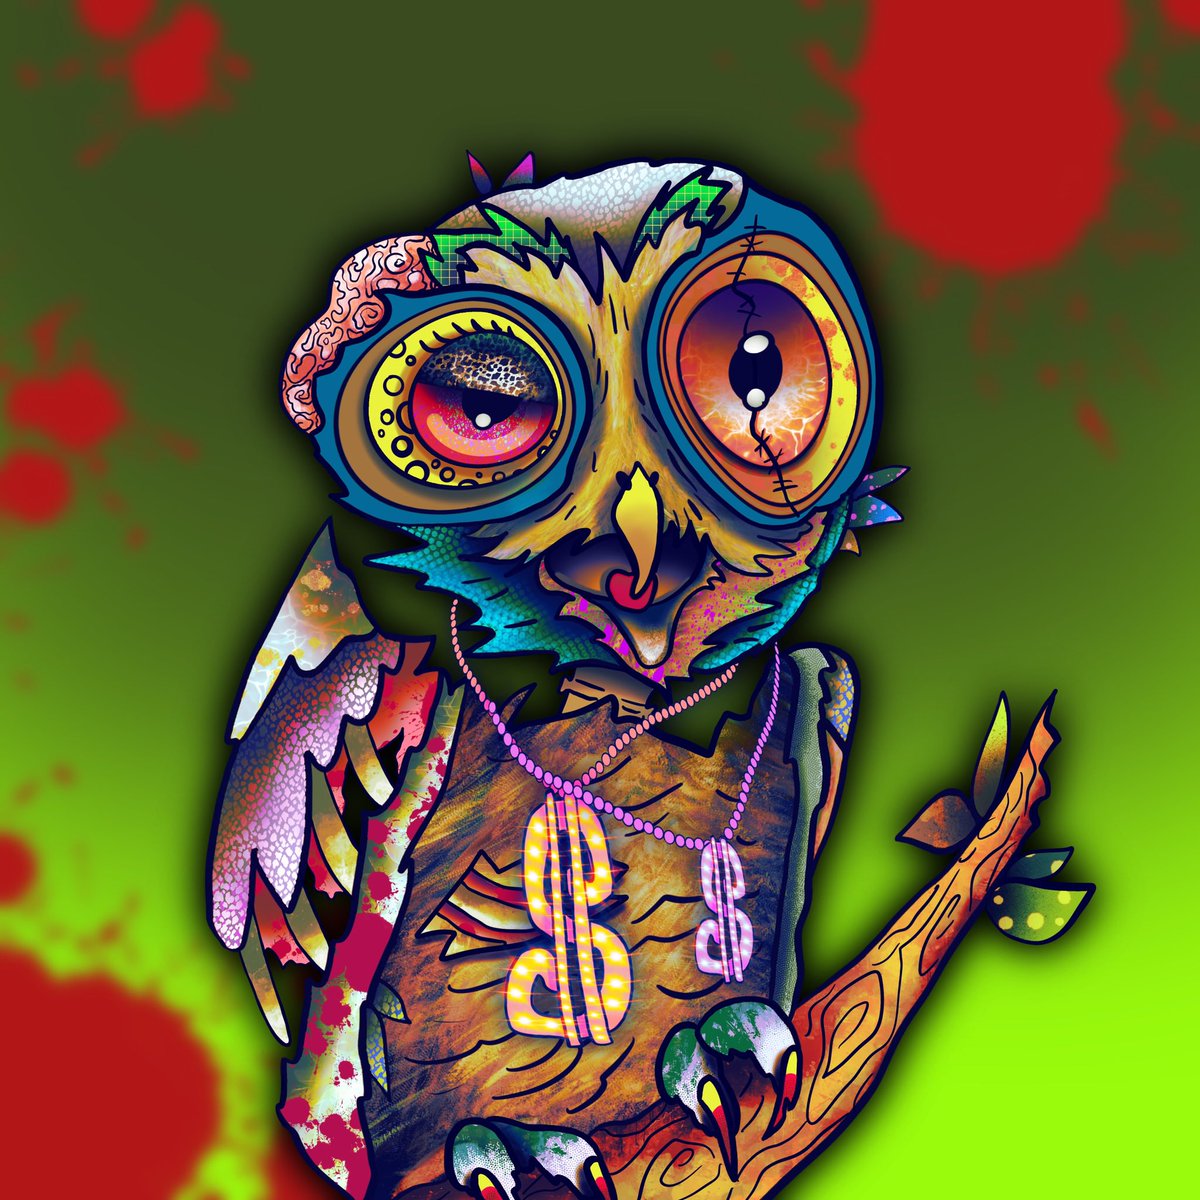 Starting up the second collection of Dead Owls!!! It's all happening 🦉🖤💫
.
.
#NFT #deadowls #AVAX #CAMPFIRE #owlart #NFTartist #NFTartwork #mintingsoon #deadlyowls #owl #collection #artist